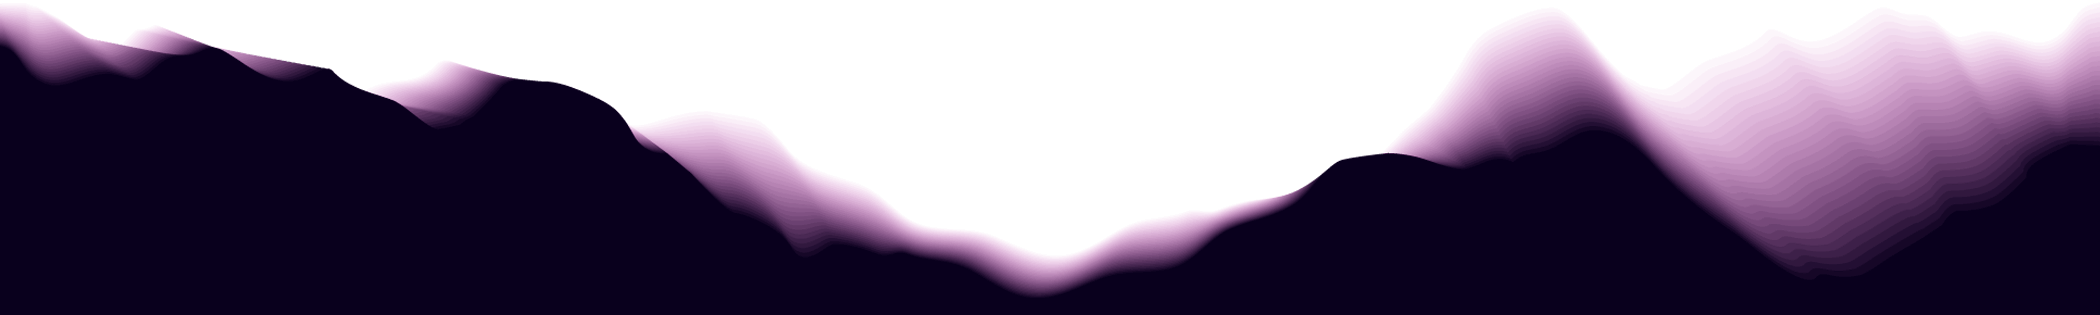 https://chironfoundation.com/wp-content/uploads/2018/05/purple_top_divider.png